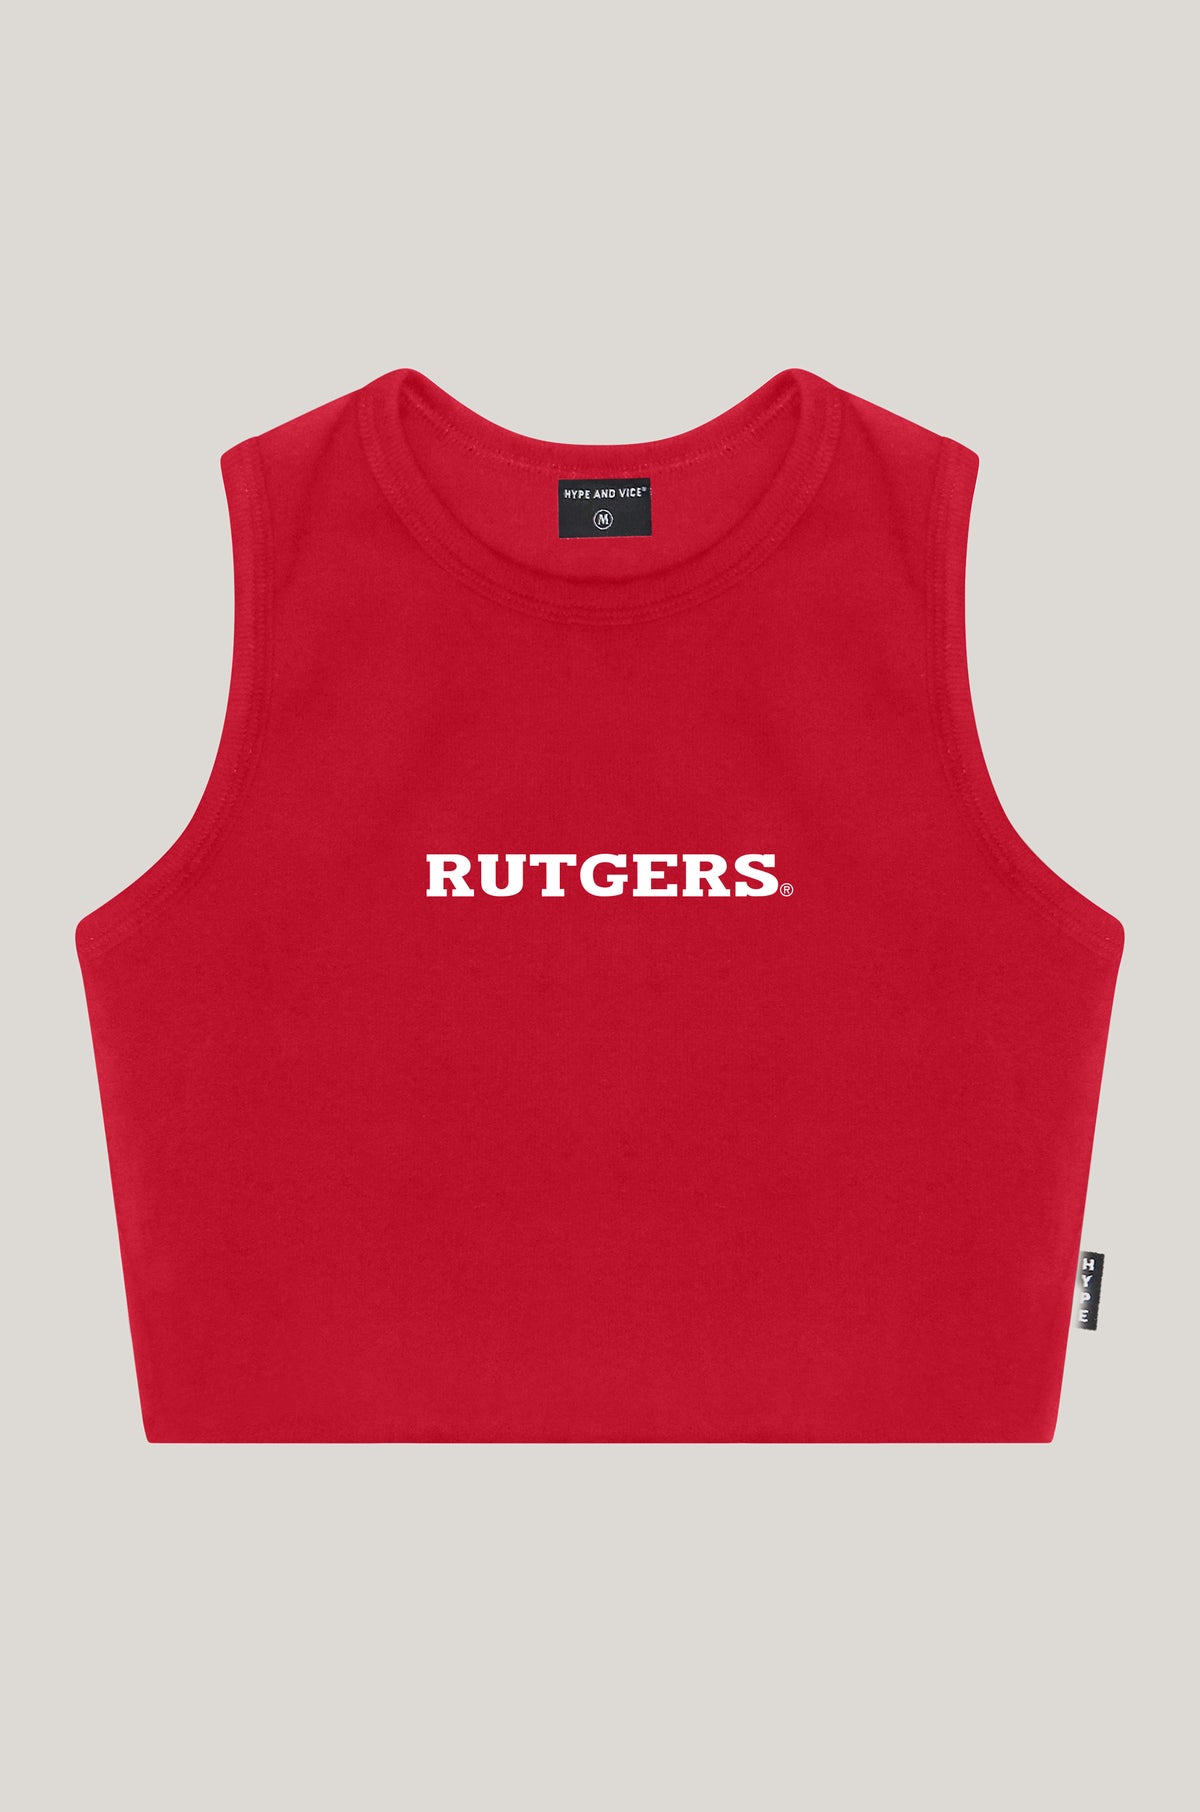 Rutgers Cut Off Tank